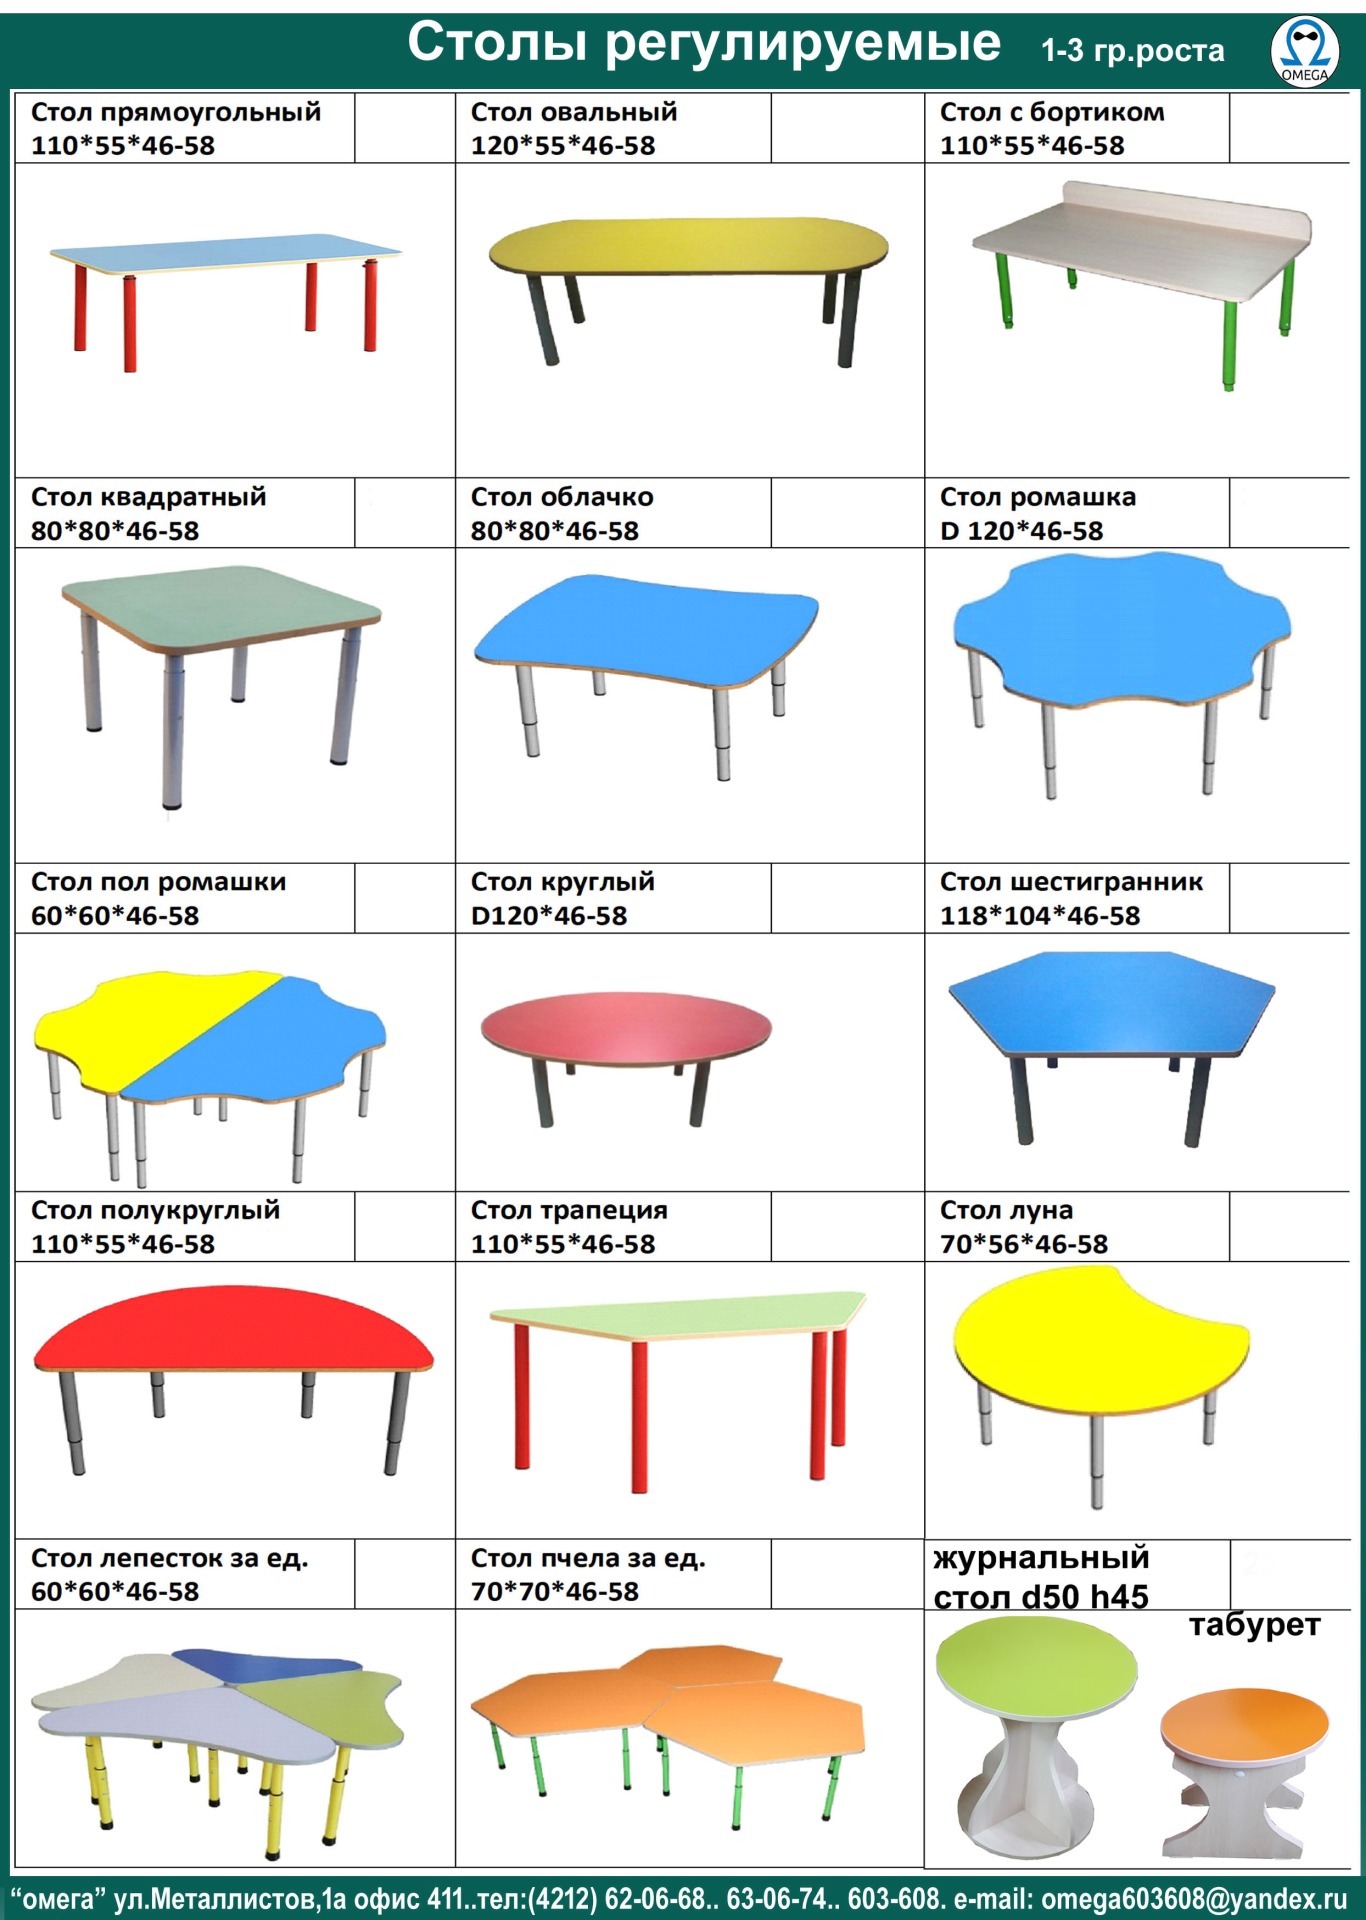 Размер стола в детском саду